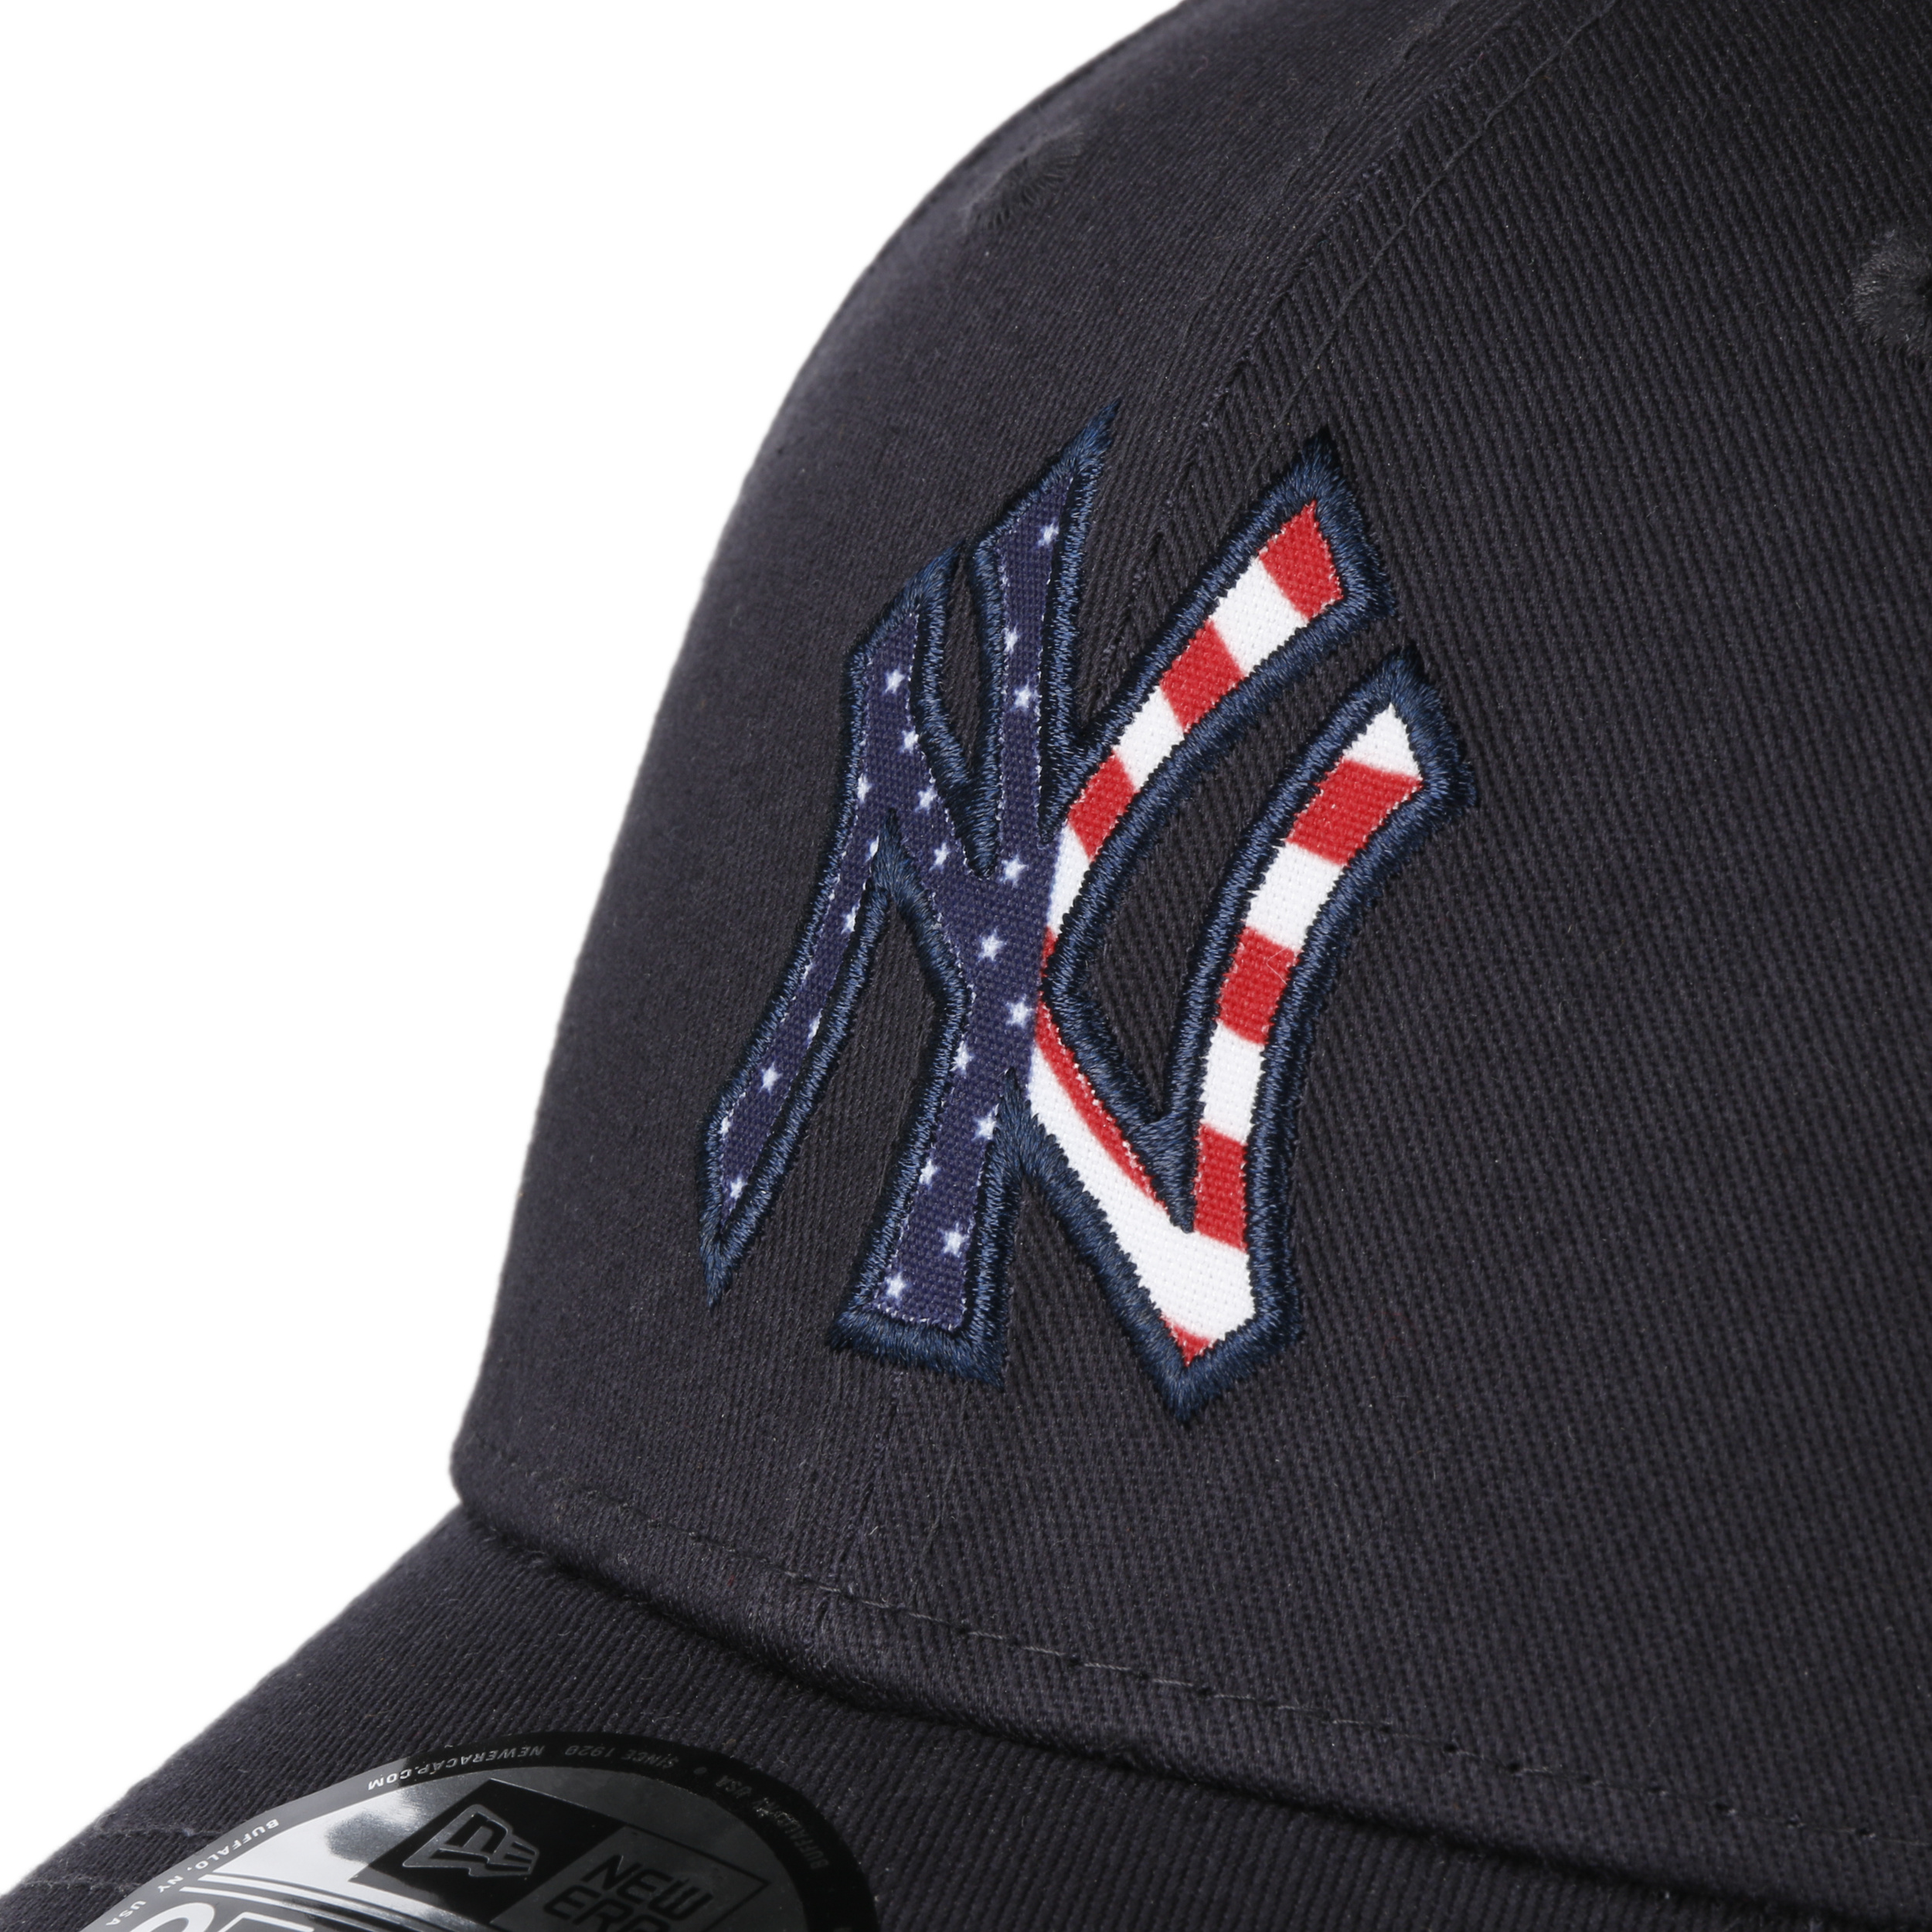 Caps - New Era New York Yankees 9FORTY (black)